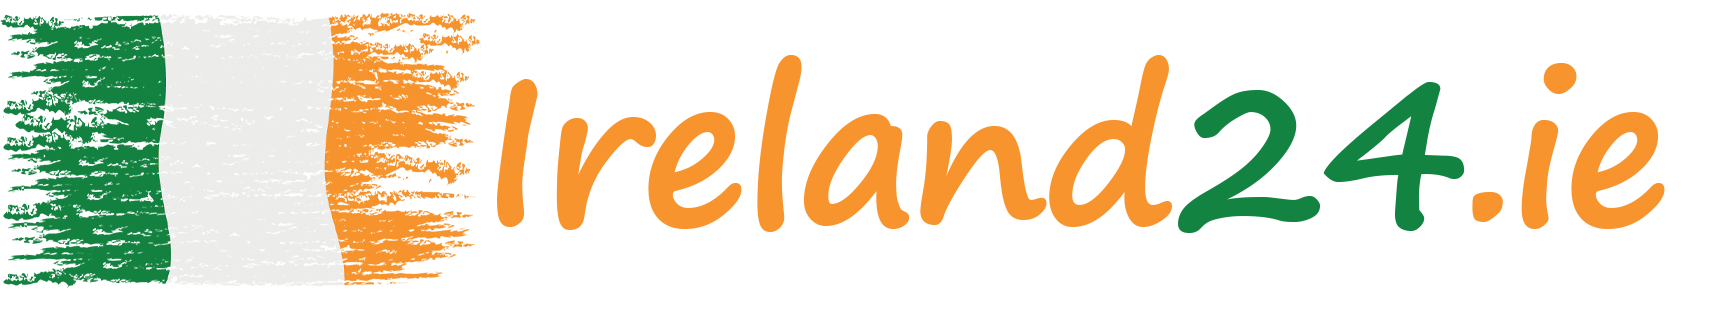 Ireland 24 logo